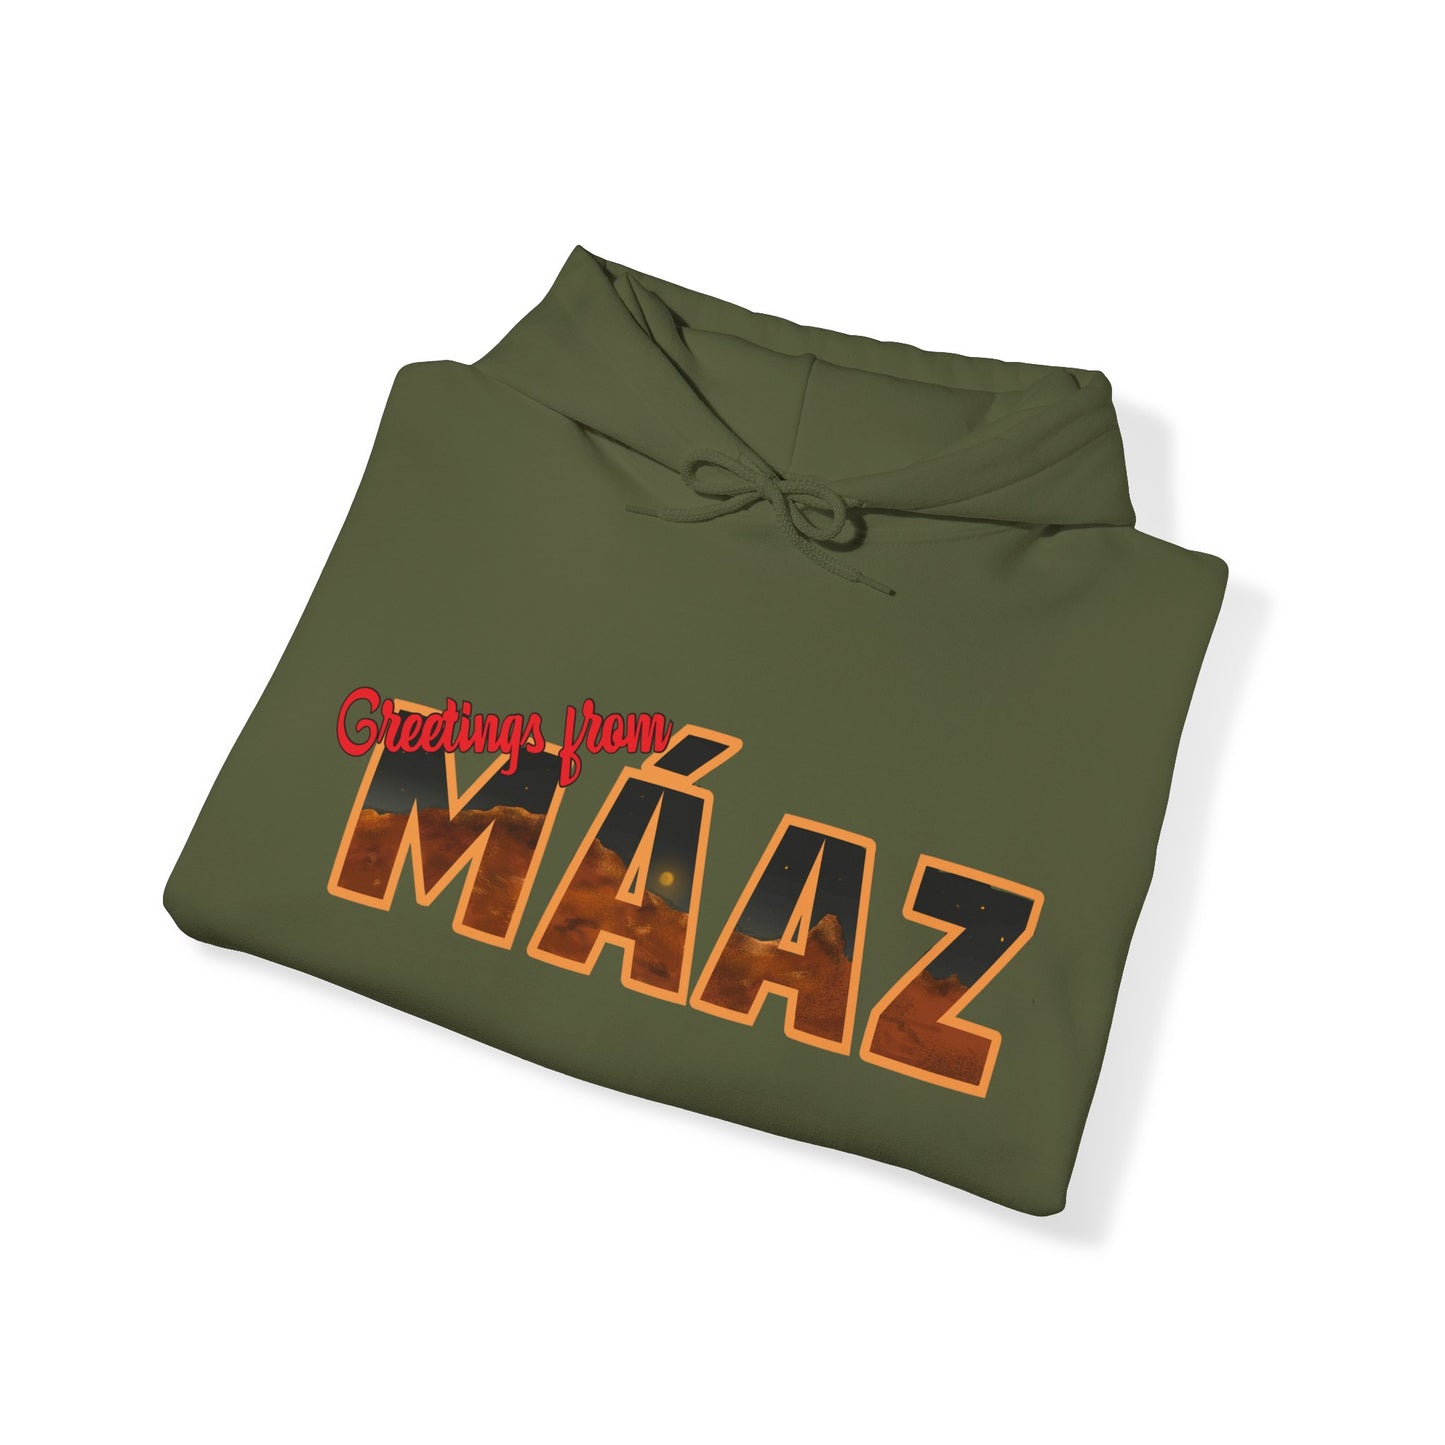 Greetings from Máaz Unisex Heavy Blend Hooded Sweatshirt